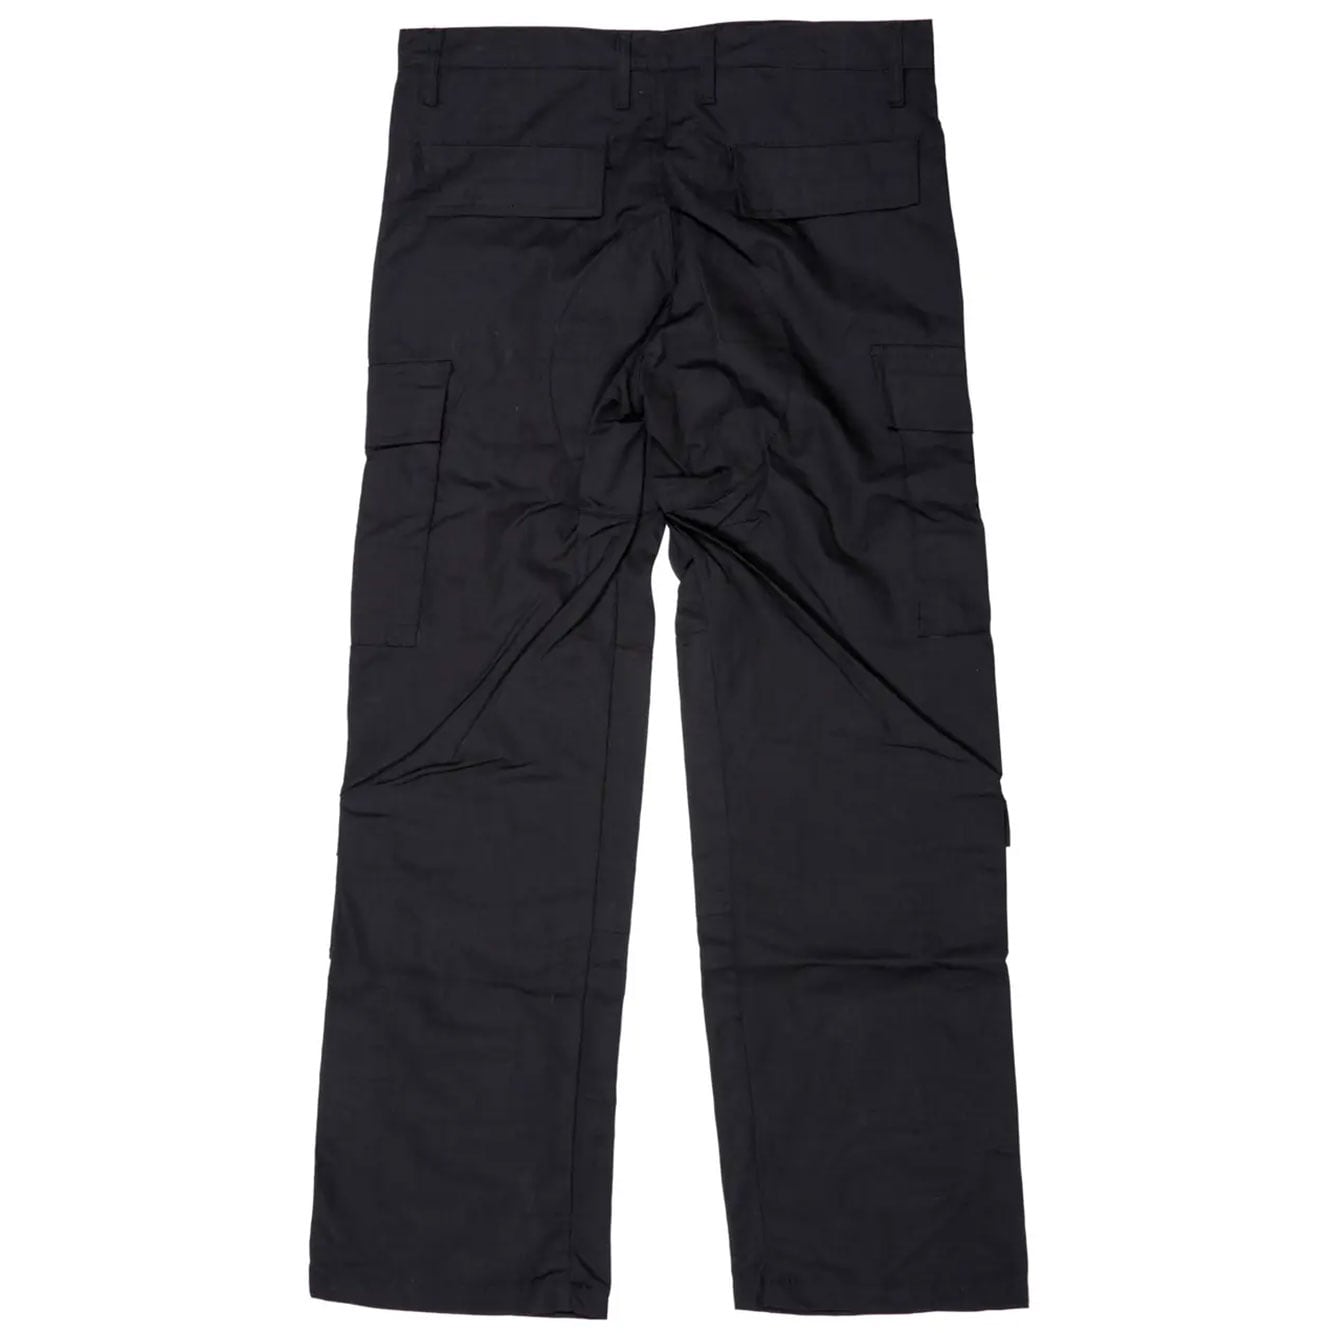 Spodnie Primal Gear ACU - Czarne